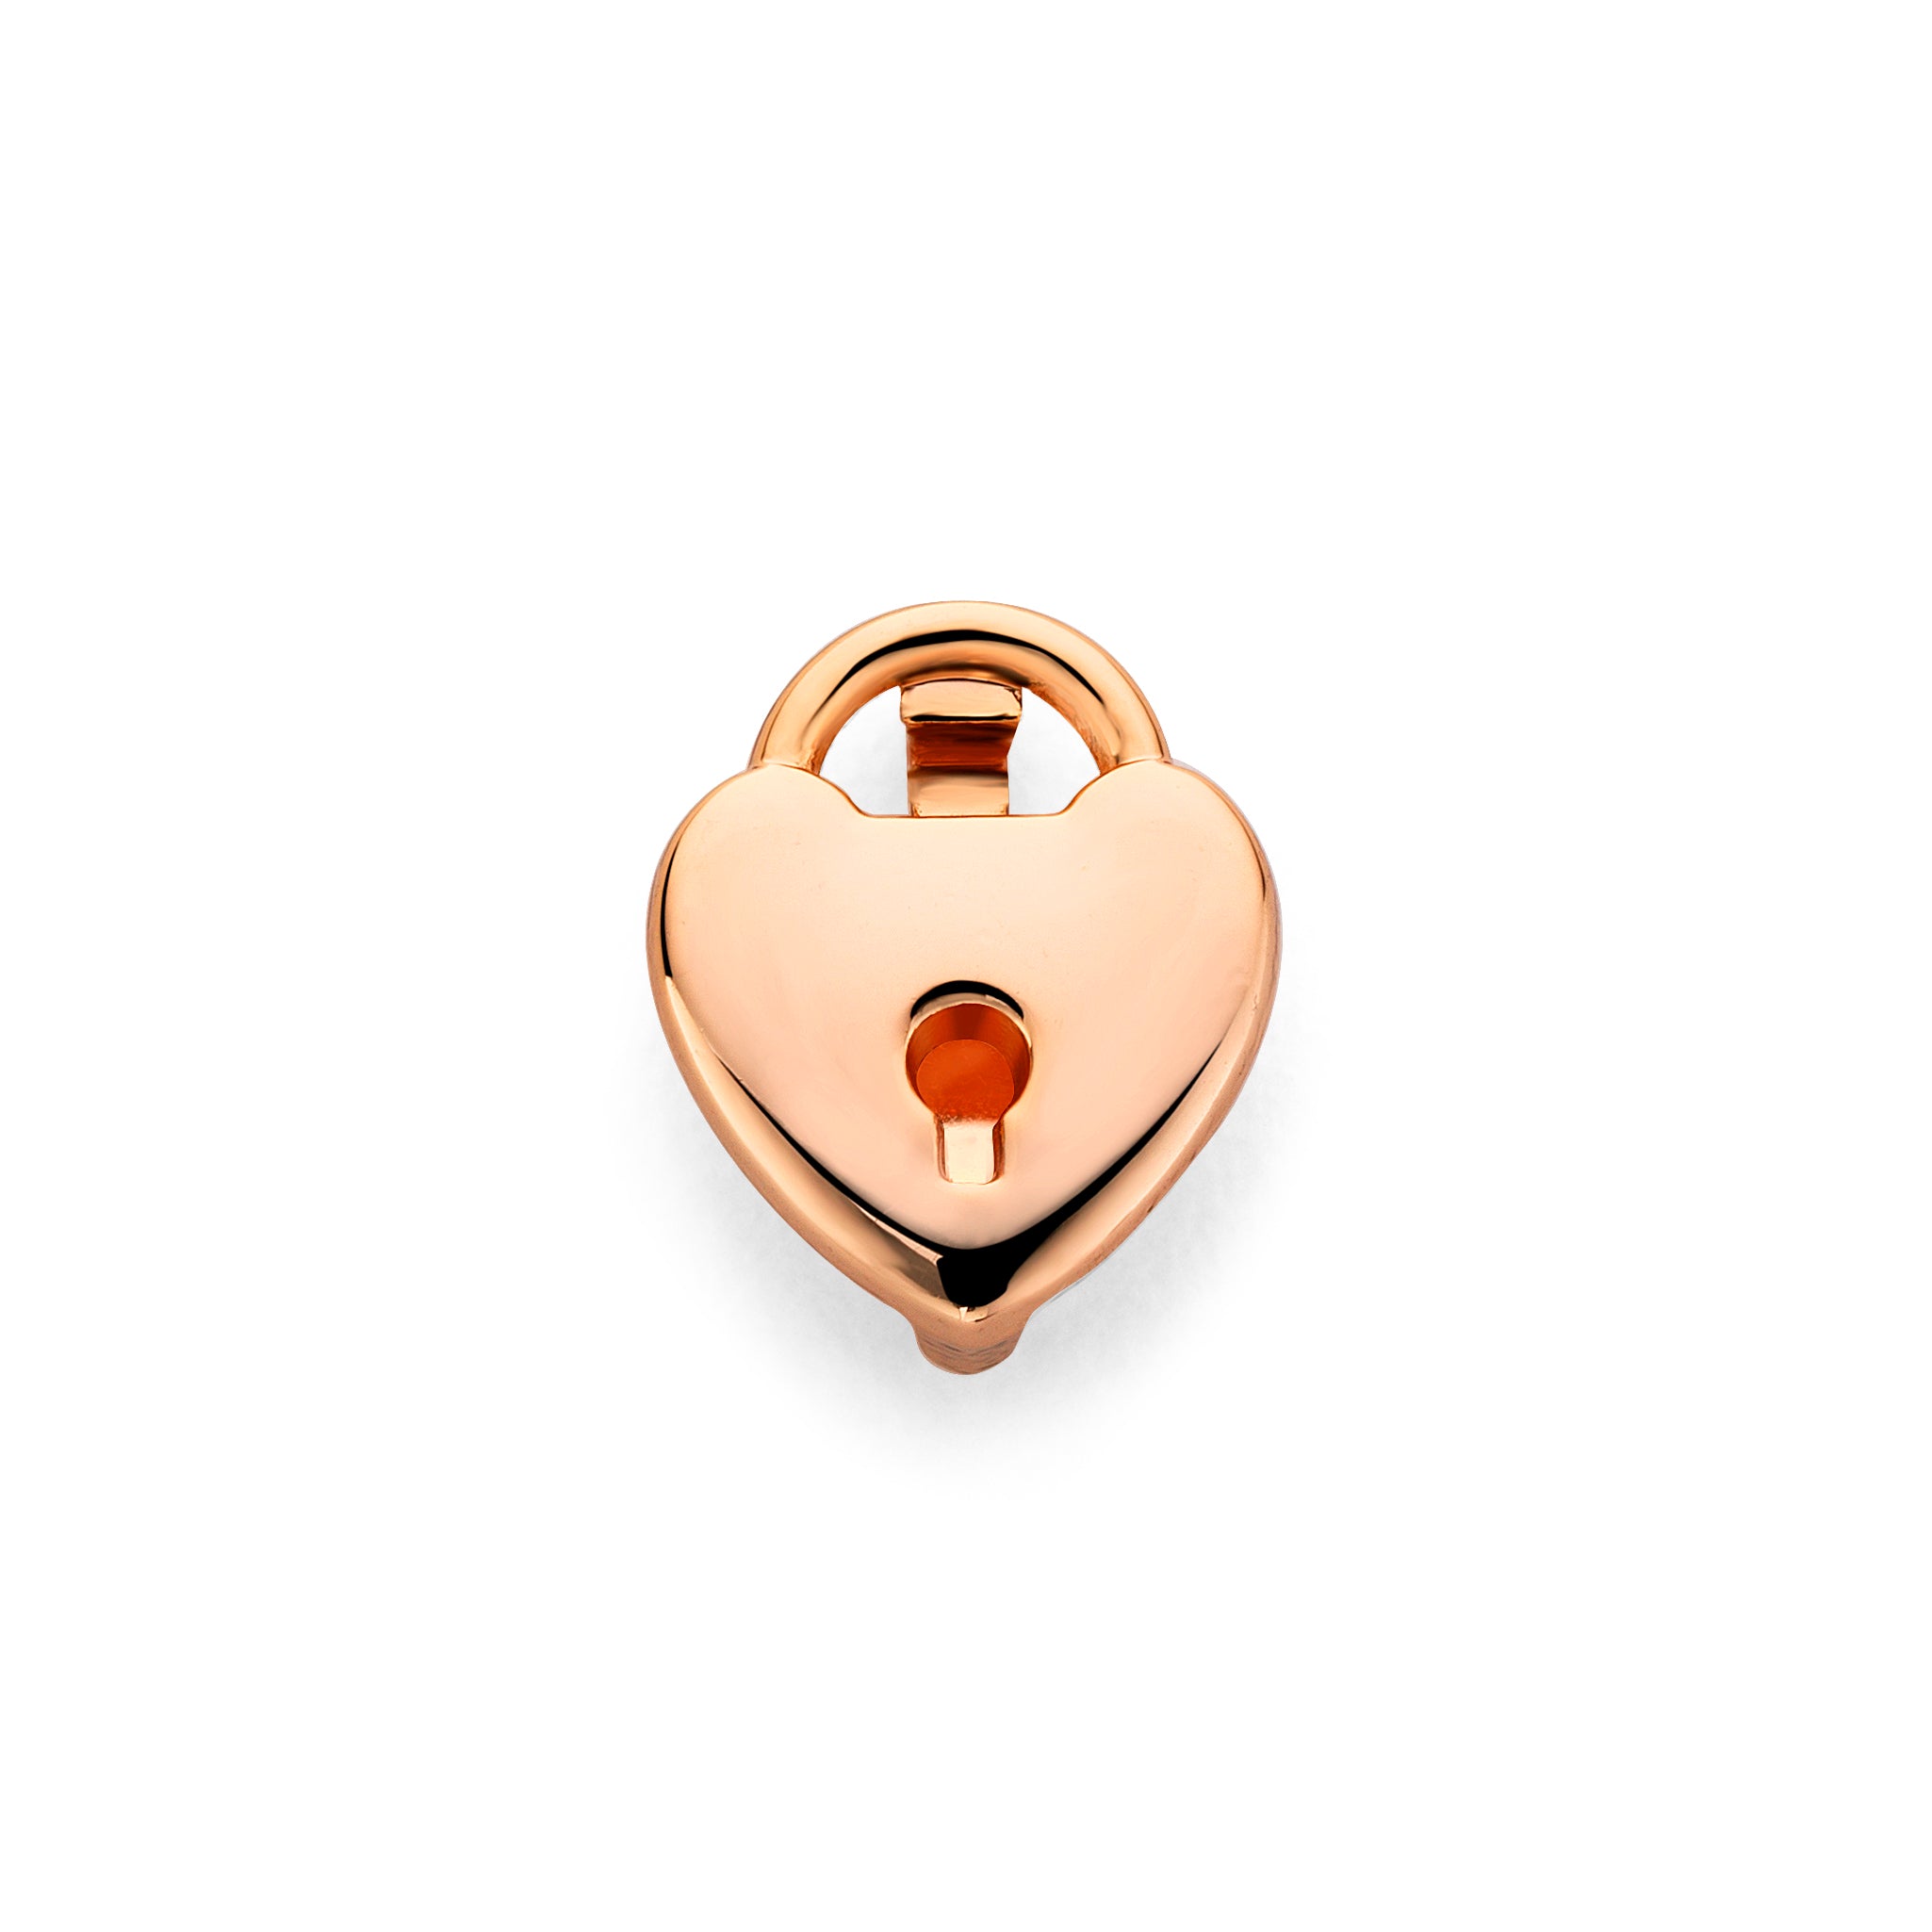 Mesh charm heart keyhole rosé gold